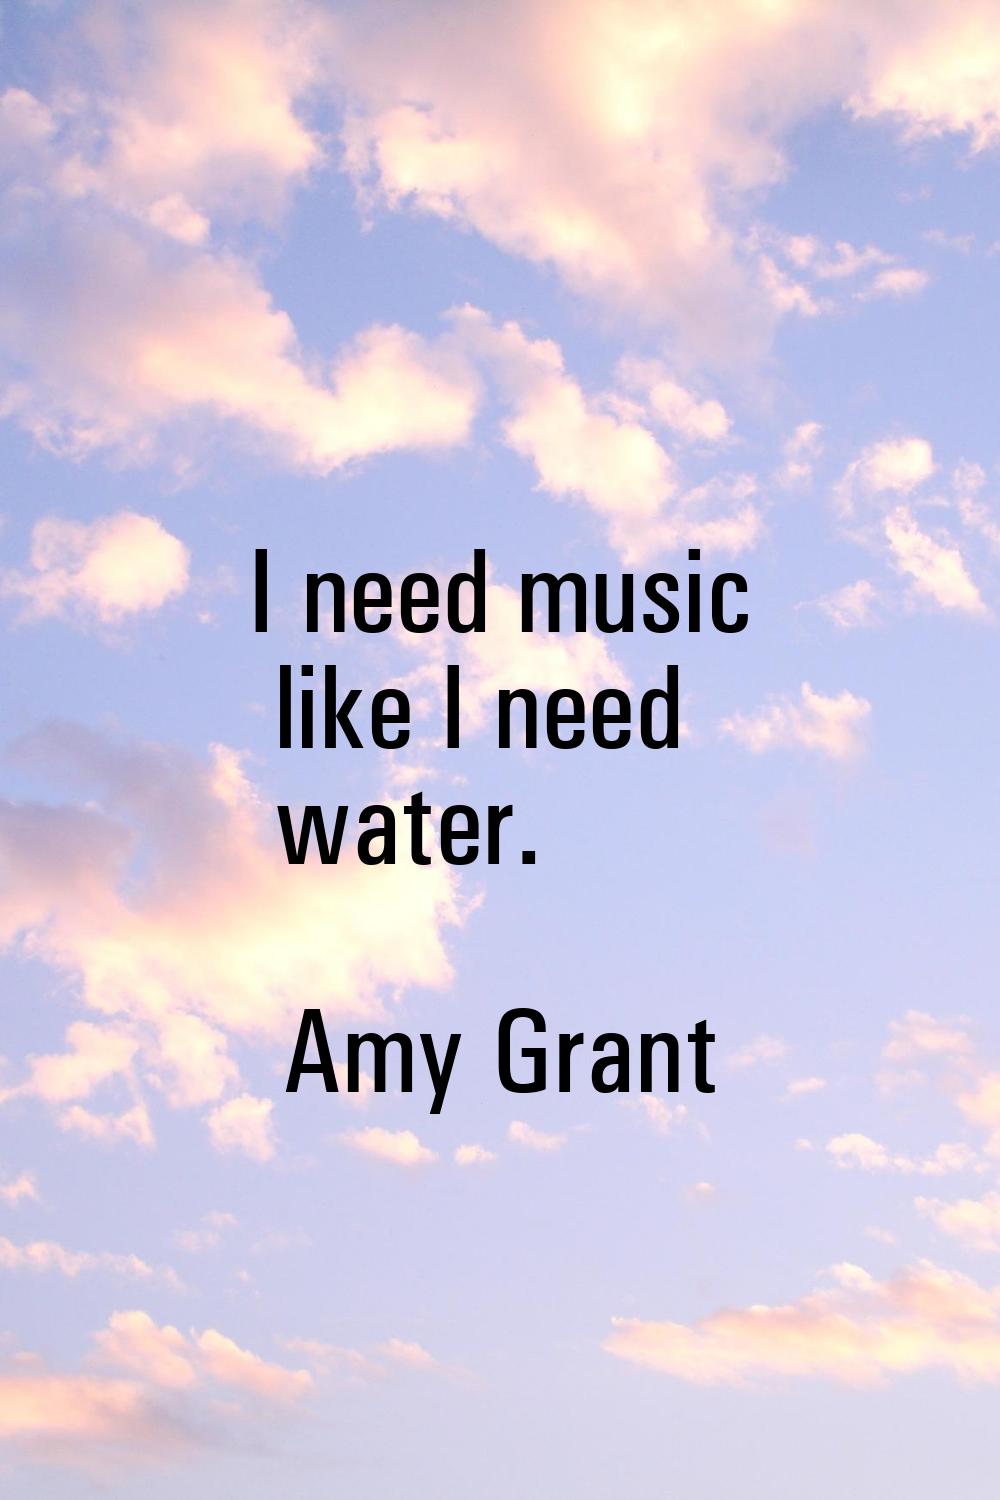 I need music like I need water.